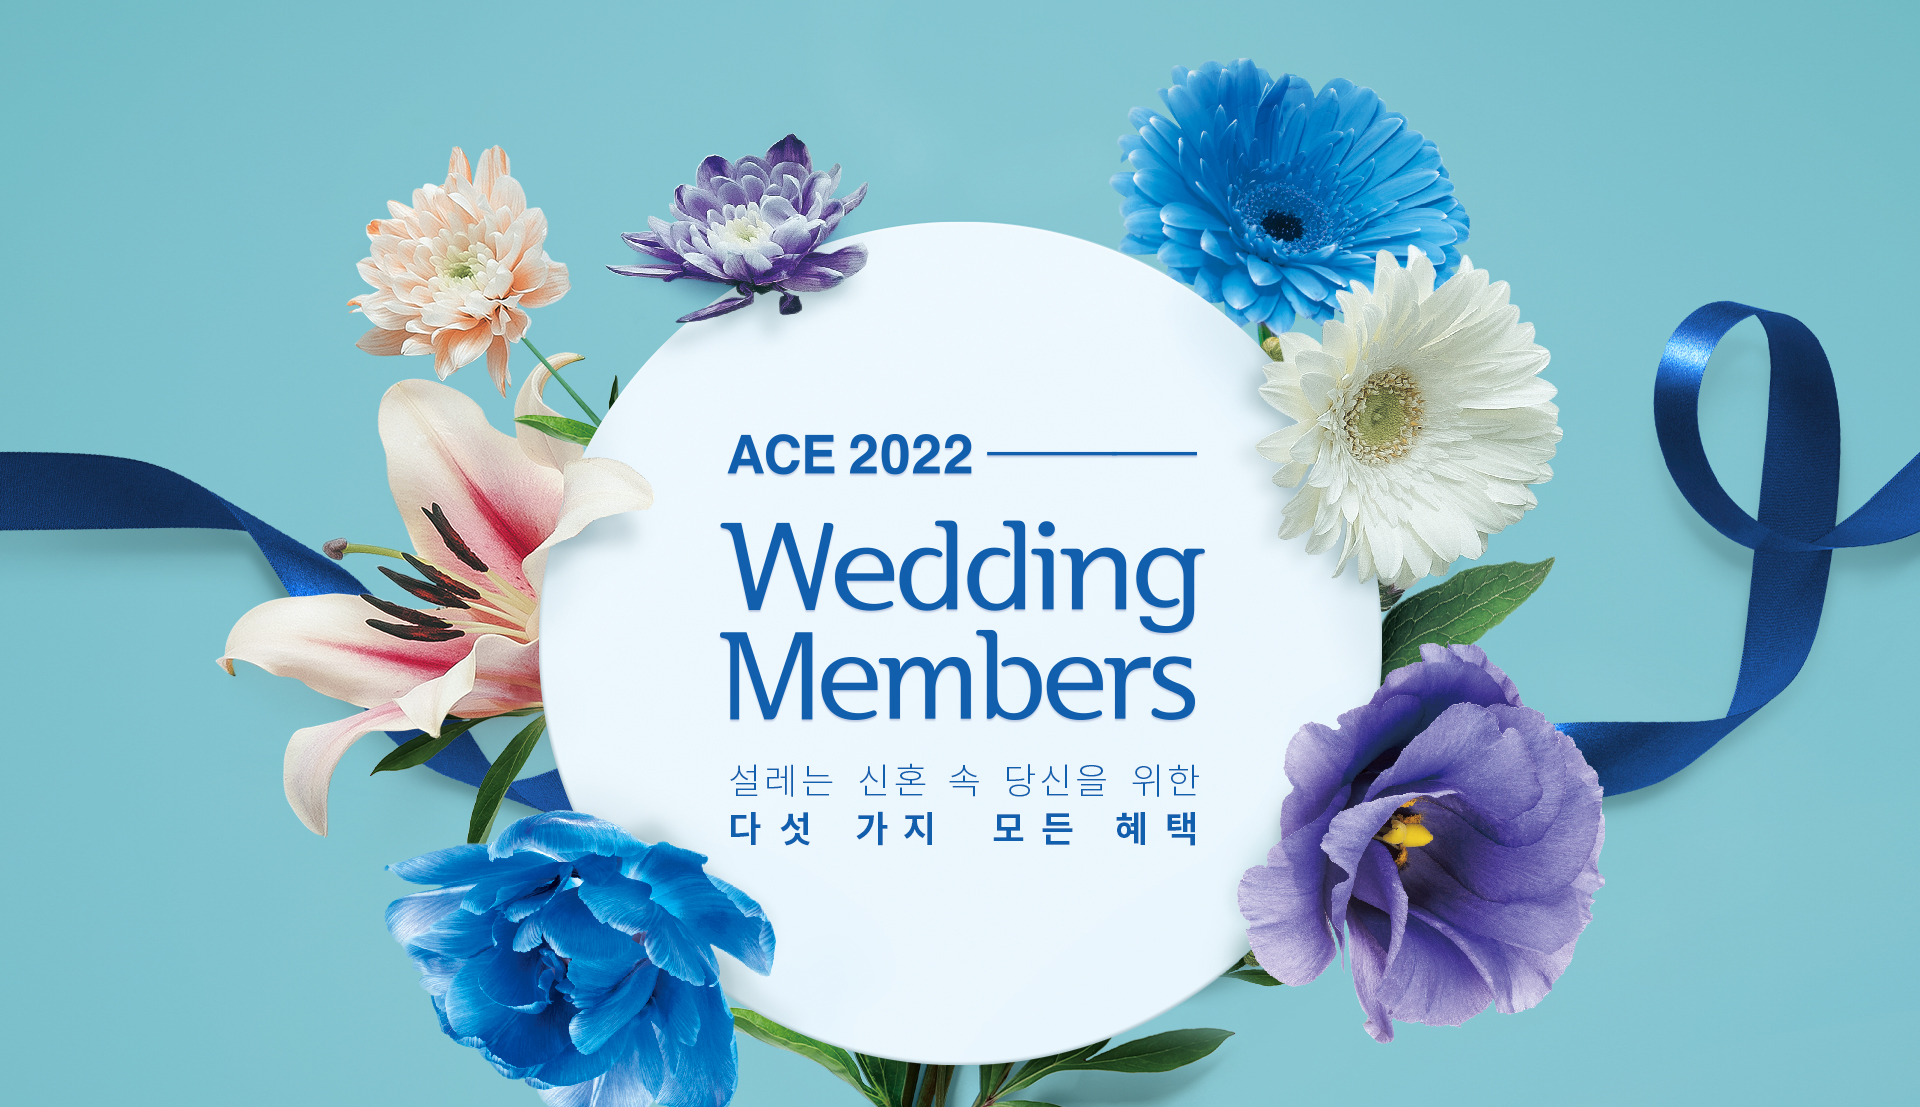 ACE 2022 Wedding Members 설레는 신혼 속 당신을 위한 다섯 가지 모든 혜택